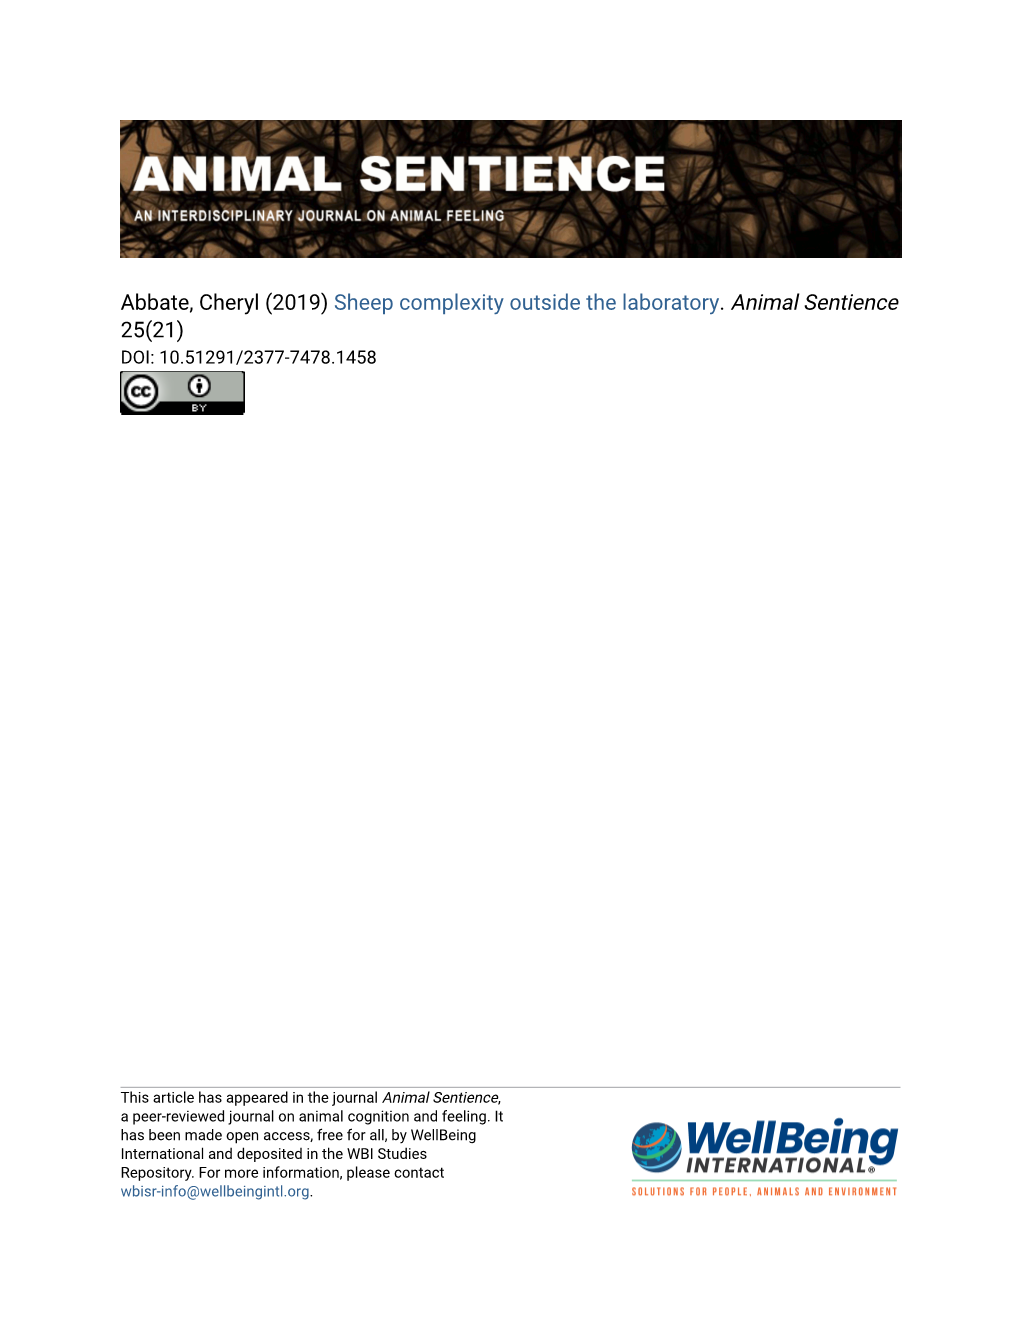 (2019) Sheep Complexity Outside the Laboratory. Animal Sentience 25(21) DOI: 10.51291/2377-7478.1458